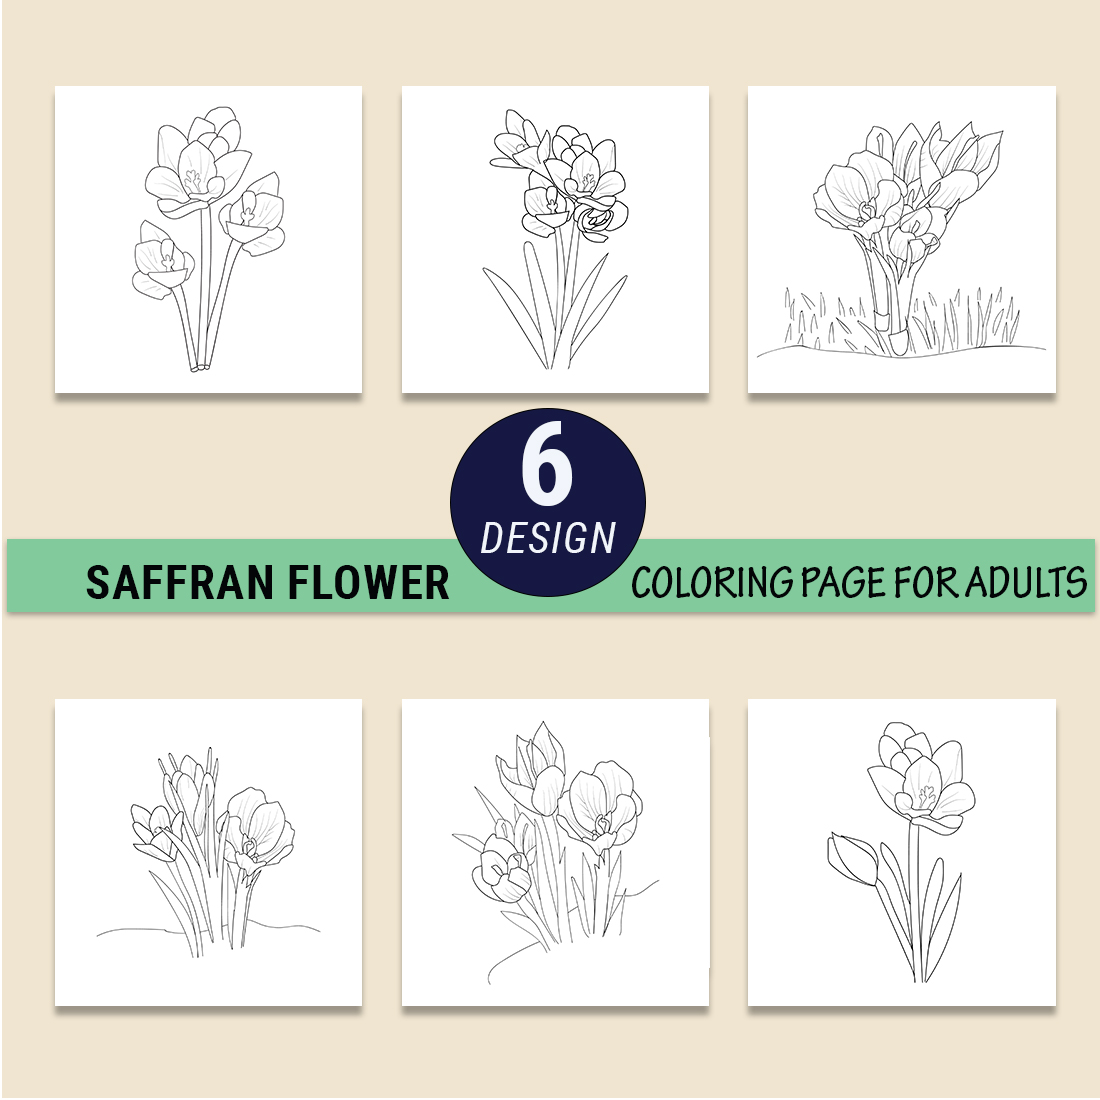 saffron crosses flower outline, crocus flower coloring pages crocus flower spring, sketch crocus flower drawing preview image.